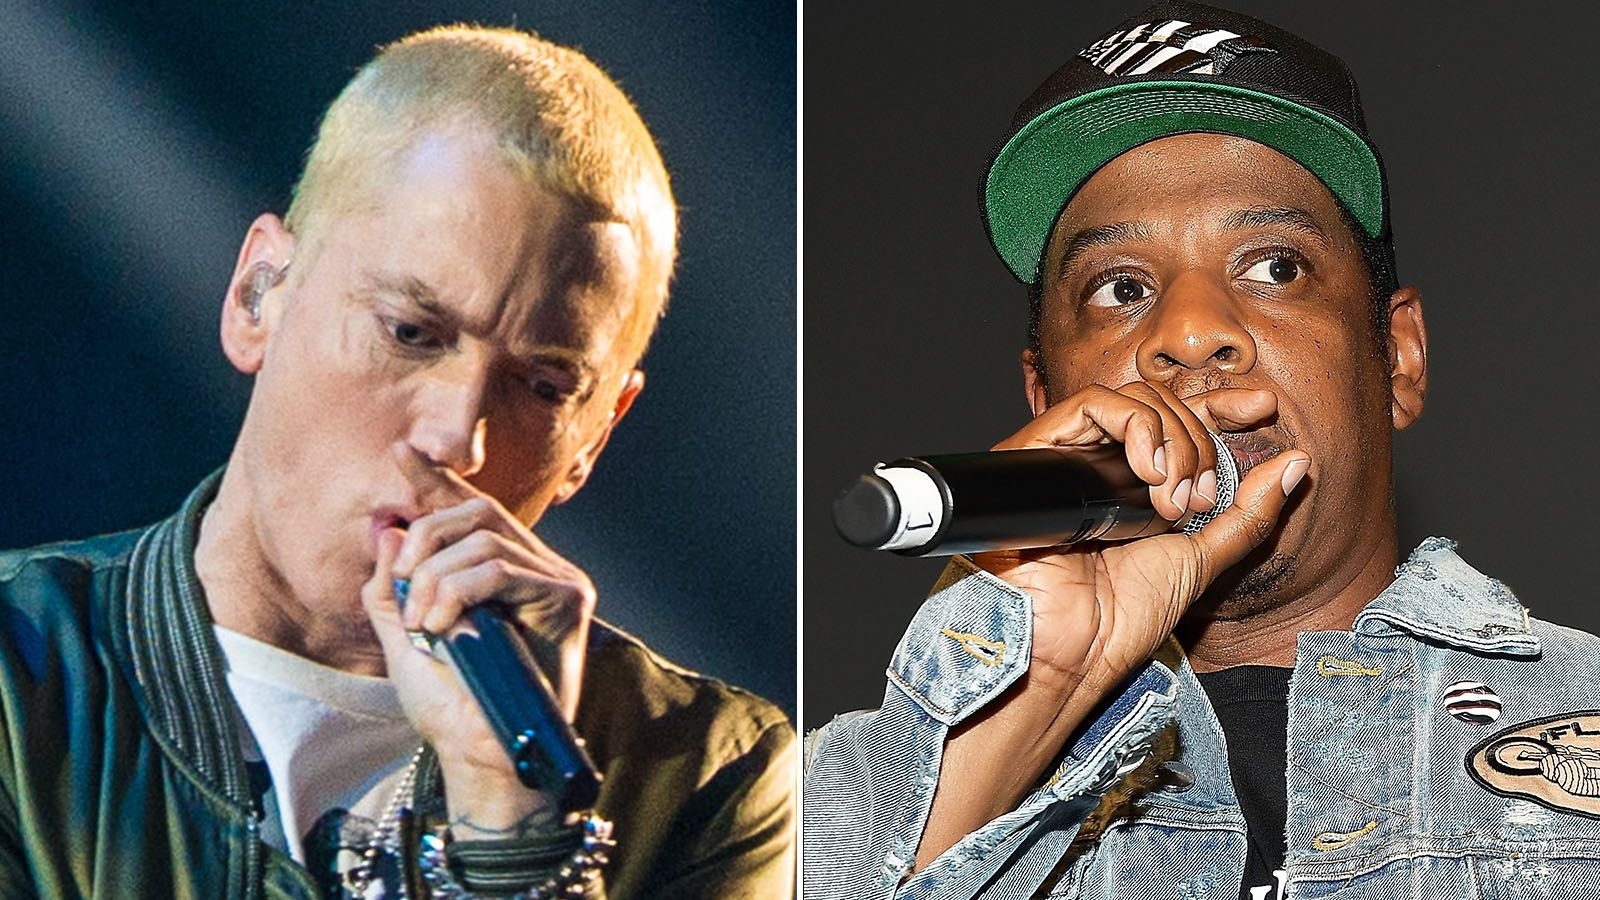 does rap music promote drug use